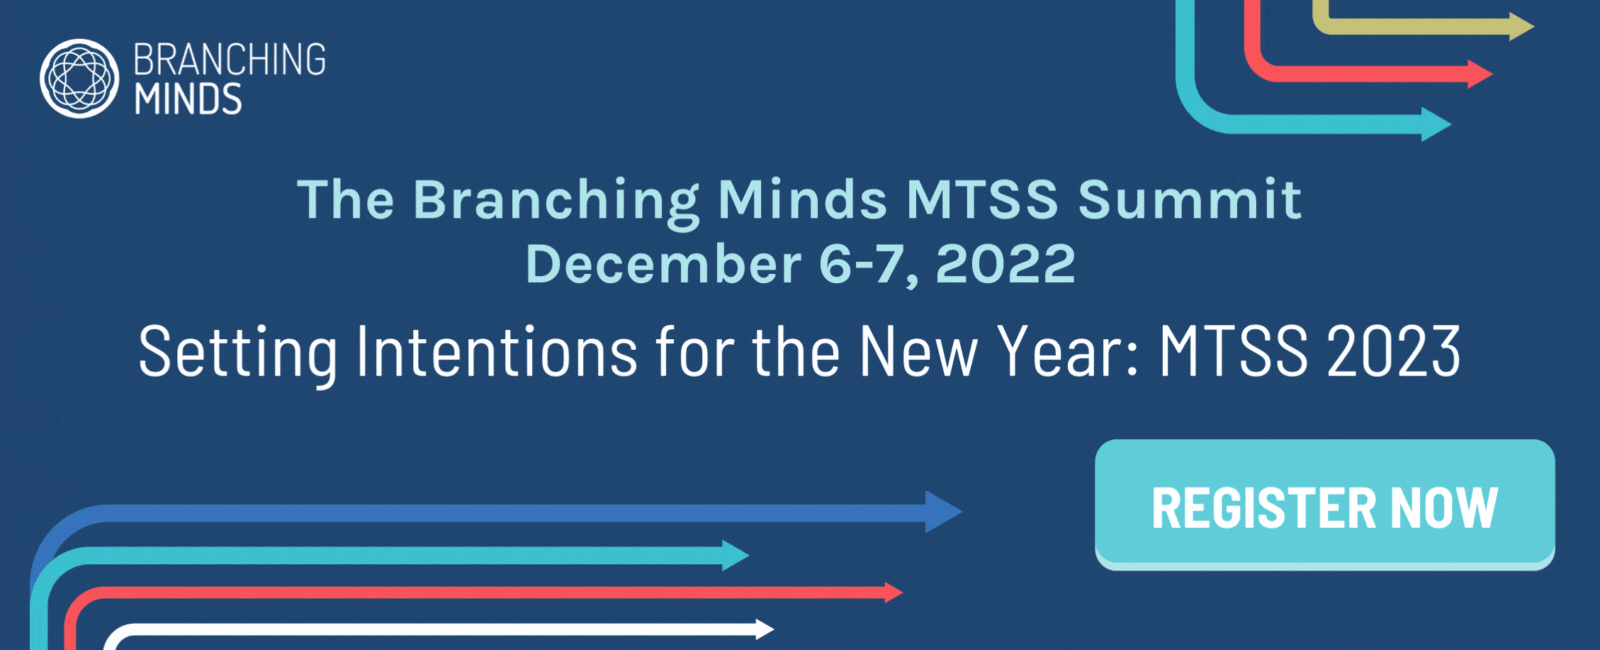 MTSS-Summit-2022-Branching-Minds